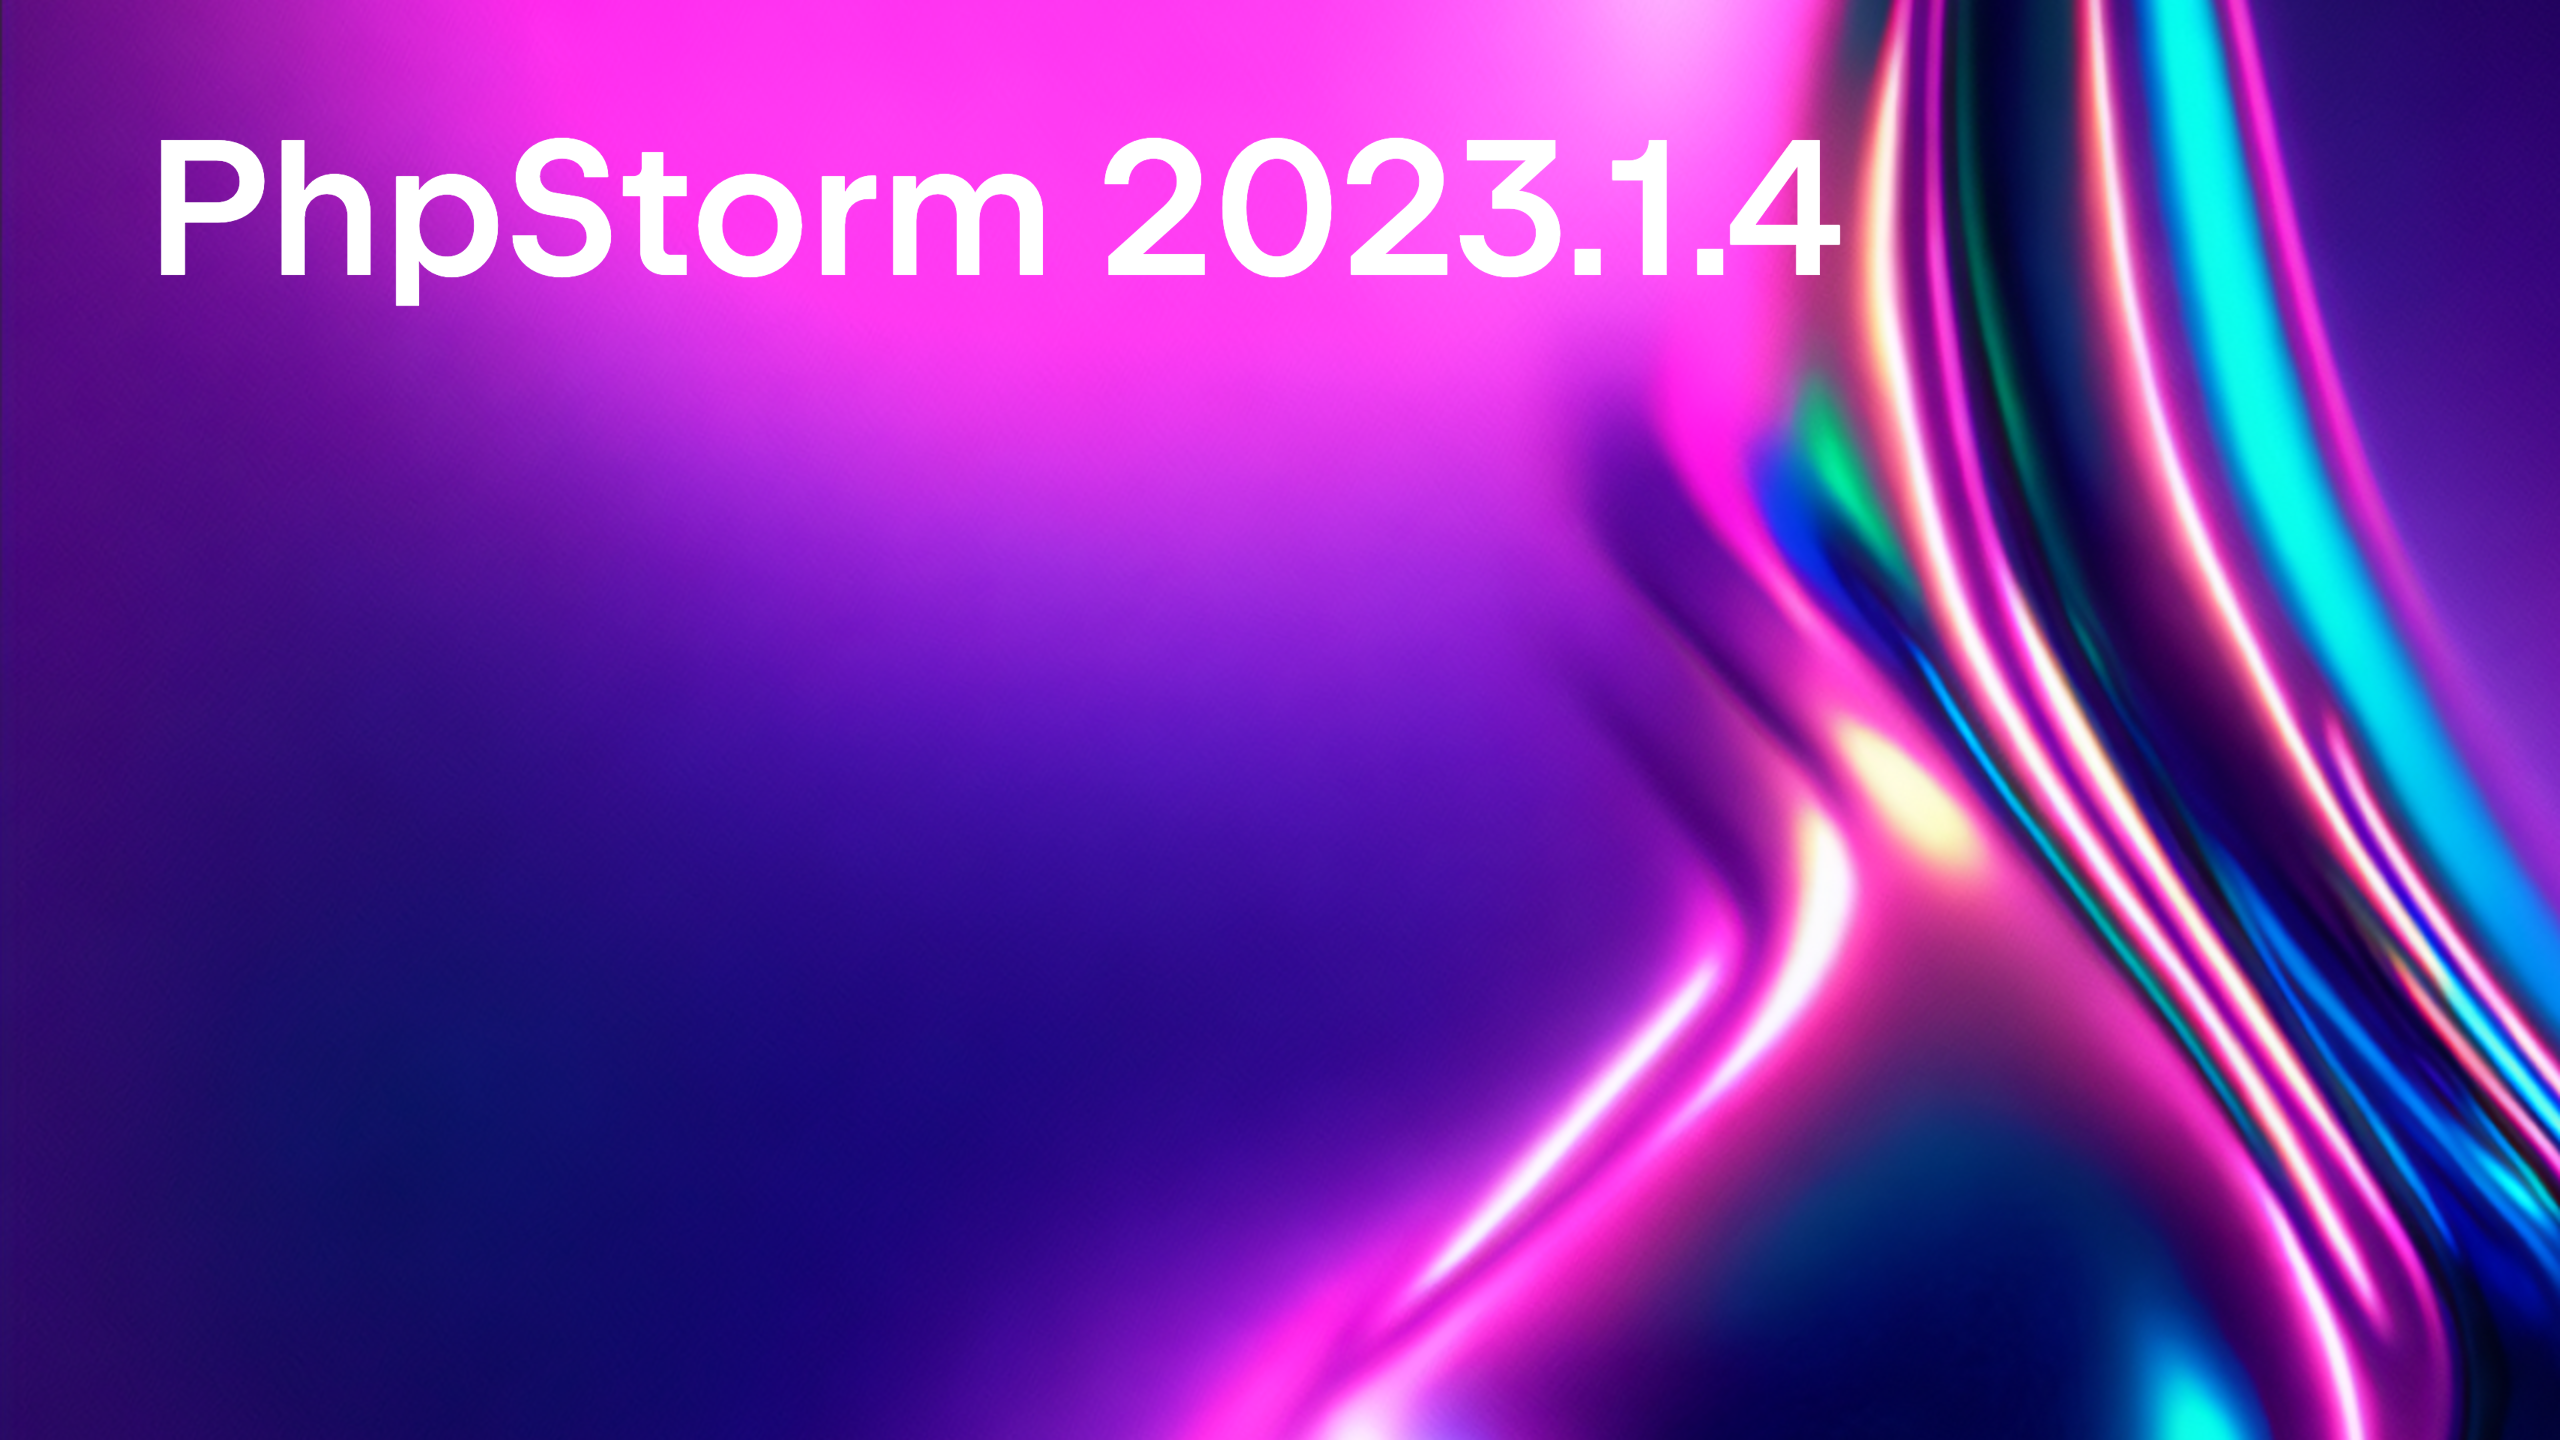 PhpStorm 2023.1.4